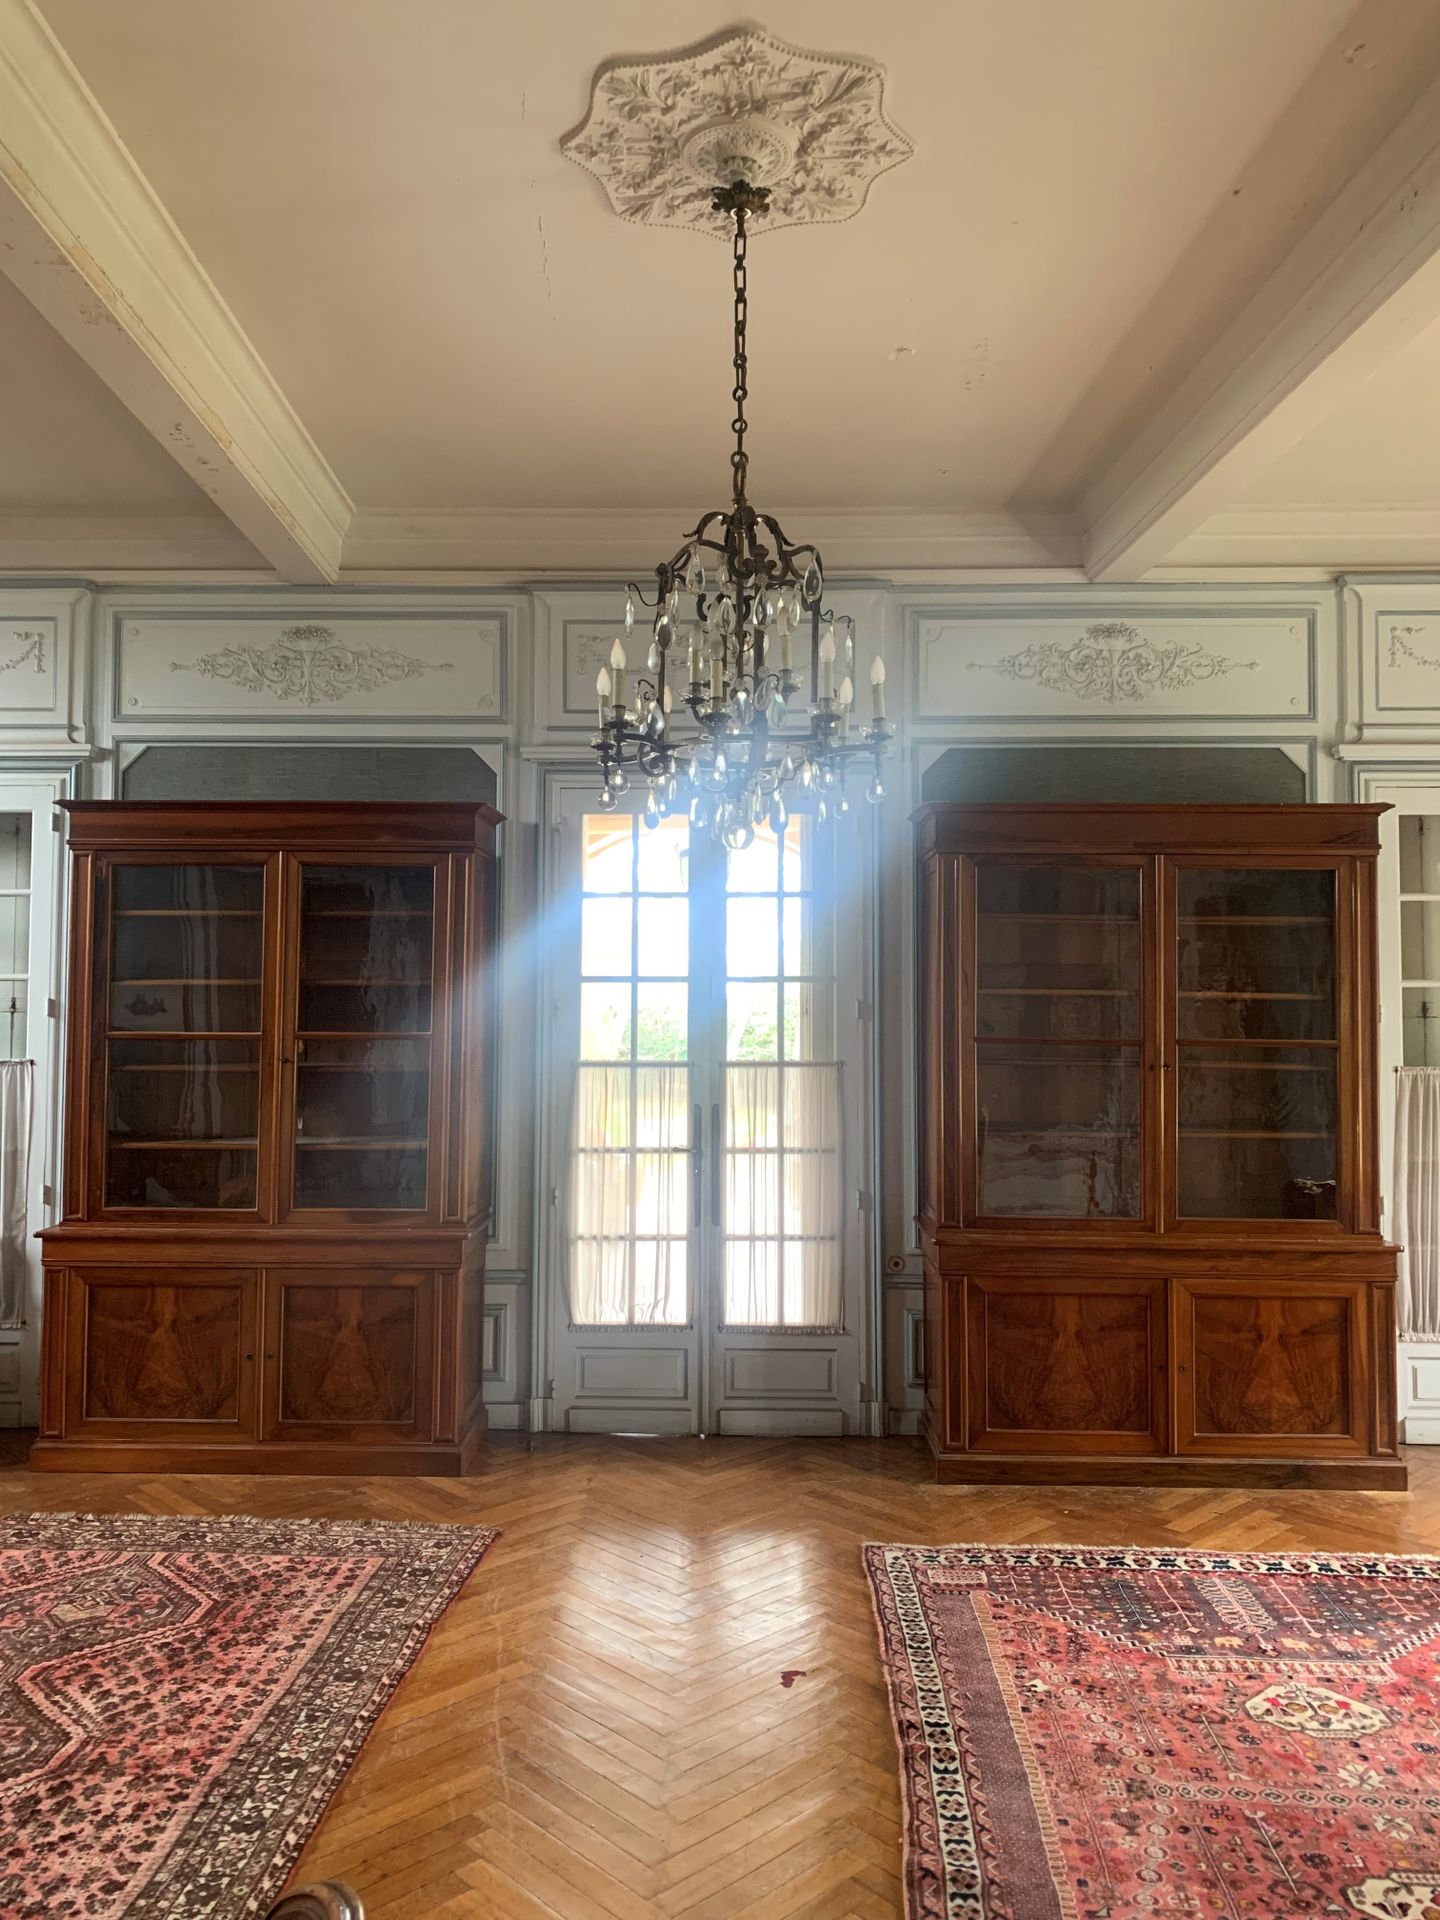 Null 一对 19 世纪胡桃木书柜，顶部有两扇玻璃门，底部有两扇门。
尺寸：255 x 172 x 58 厘米